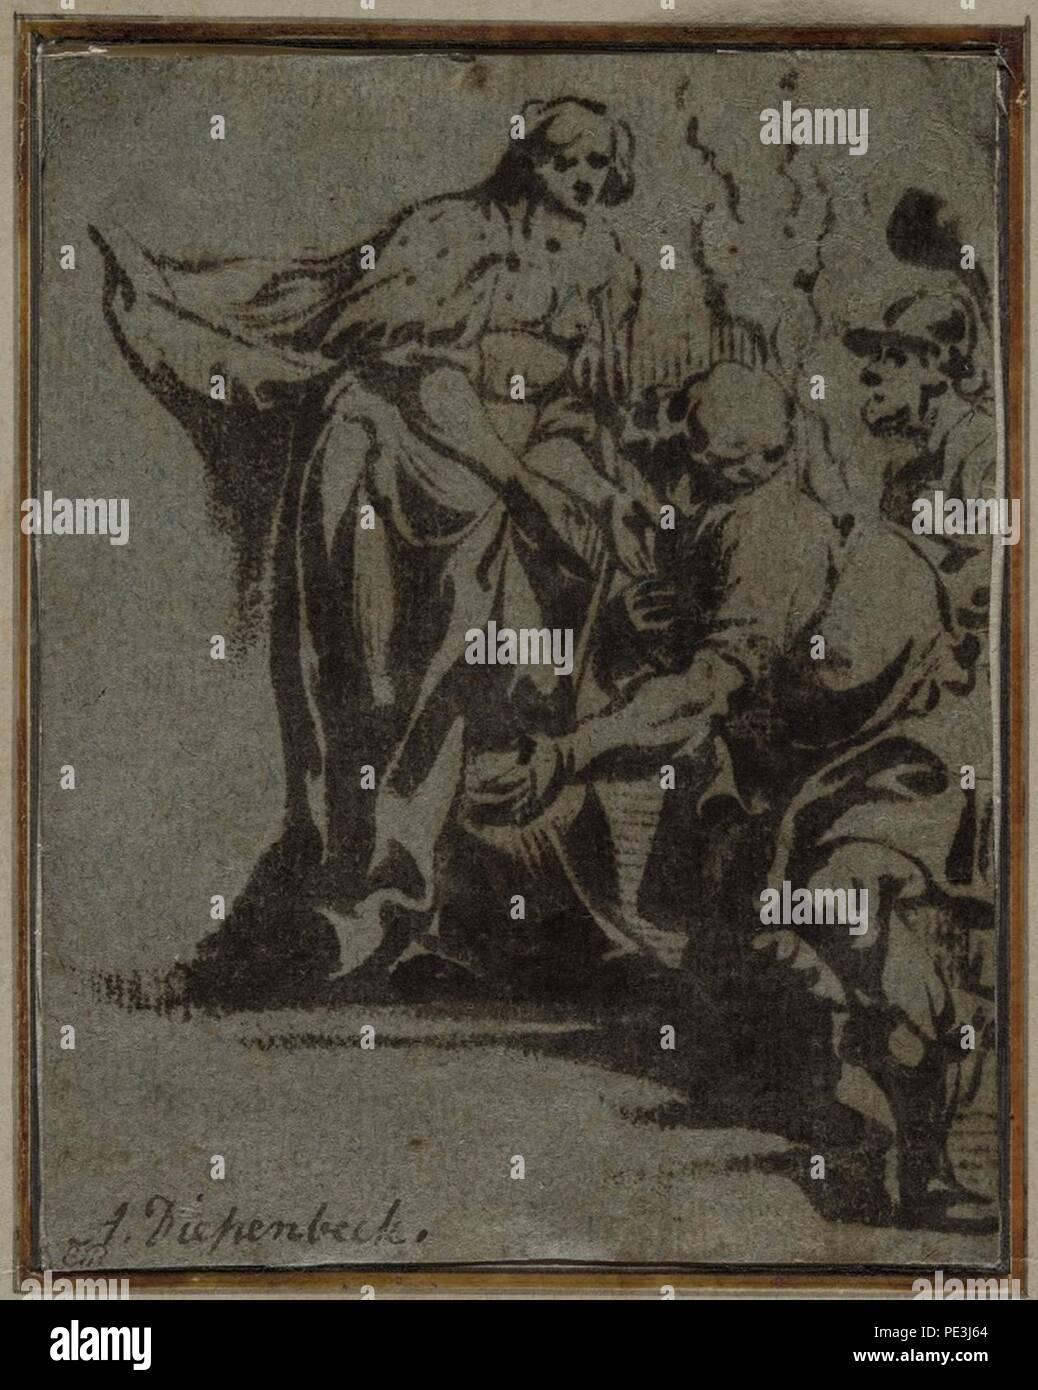 Antoon Sallaert, Abraham van Diepenbeeck (dopo) - Una scena della mitologia classica. Foto Stock